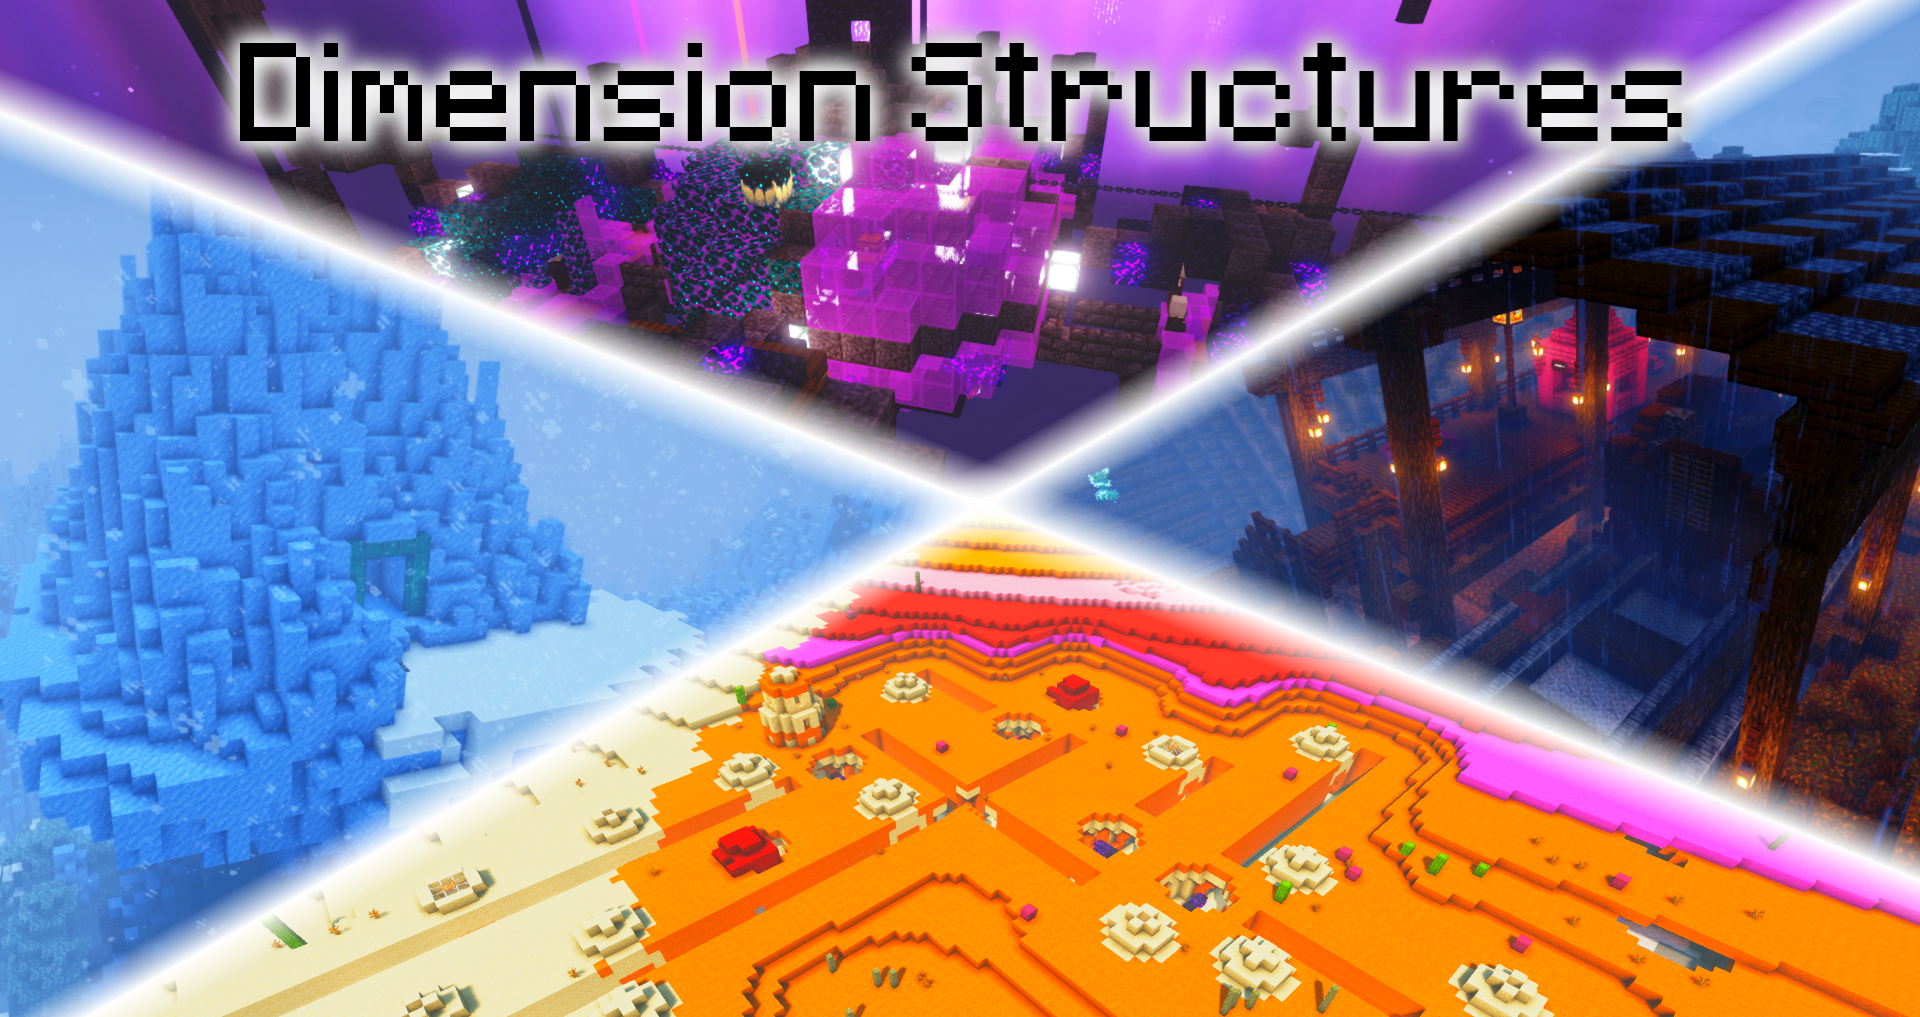 7. Dimension Structures